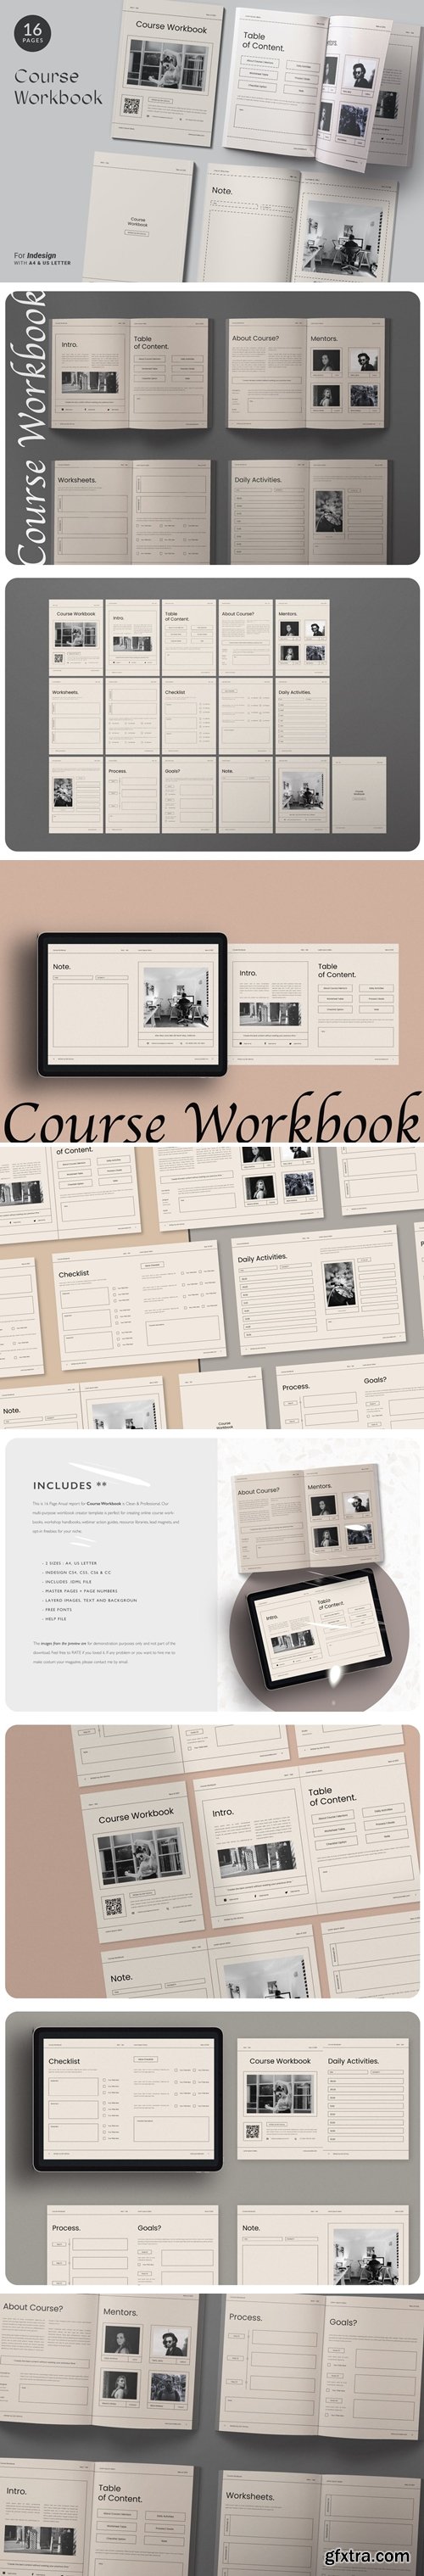 The Course Workbook | Minimal